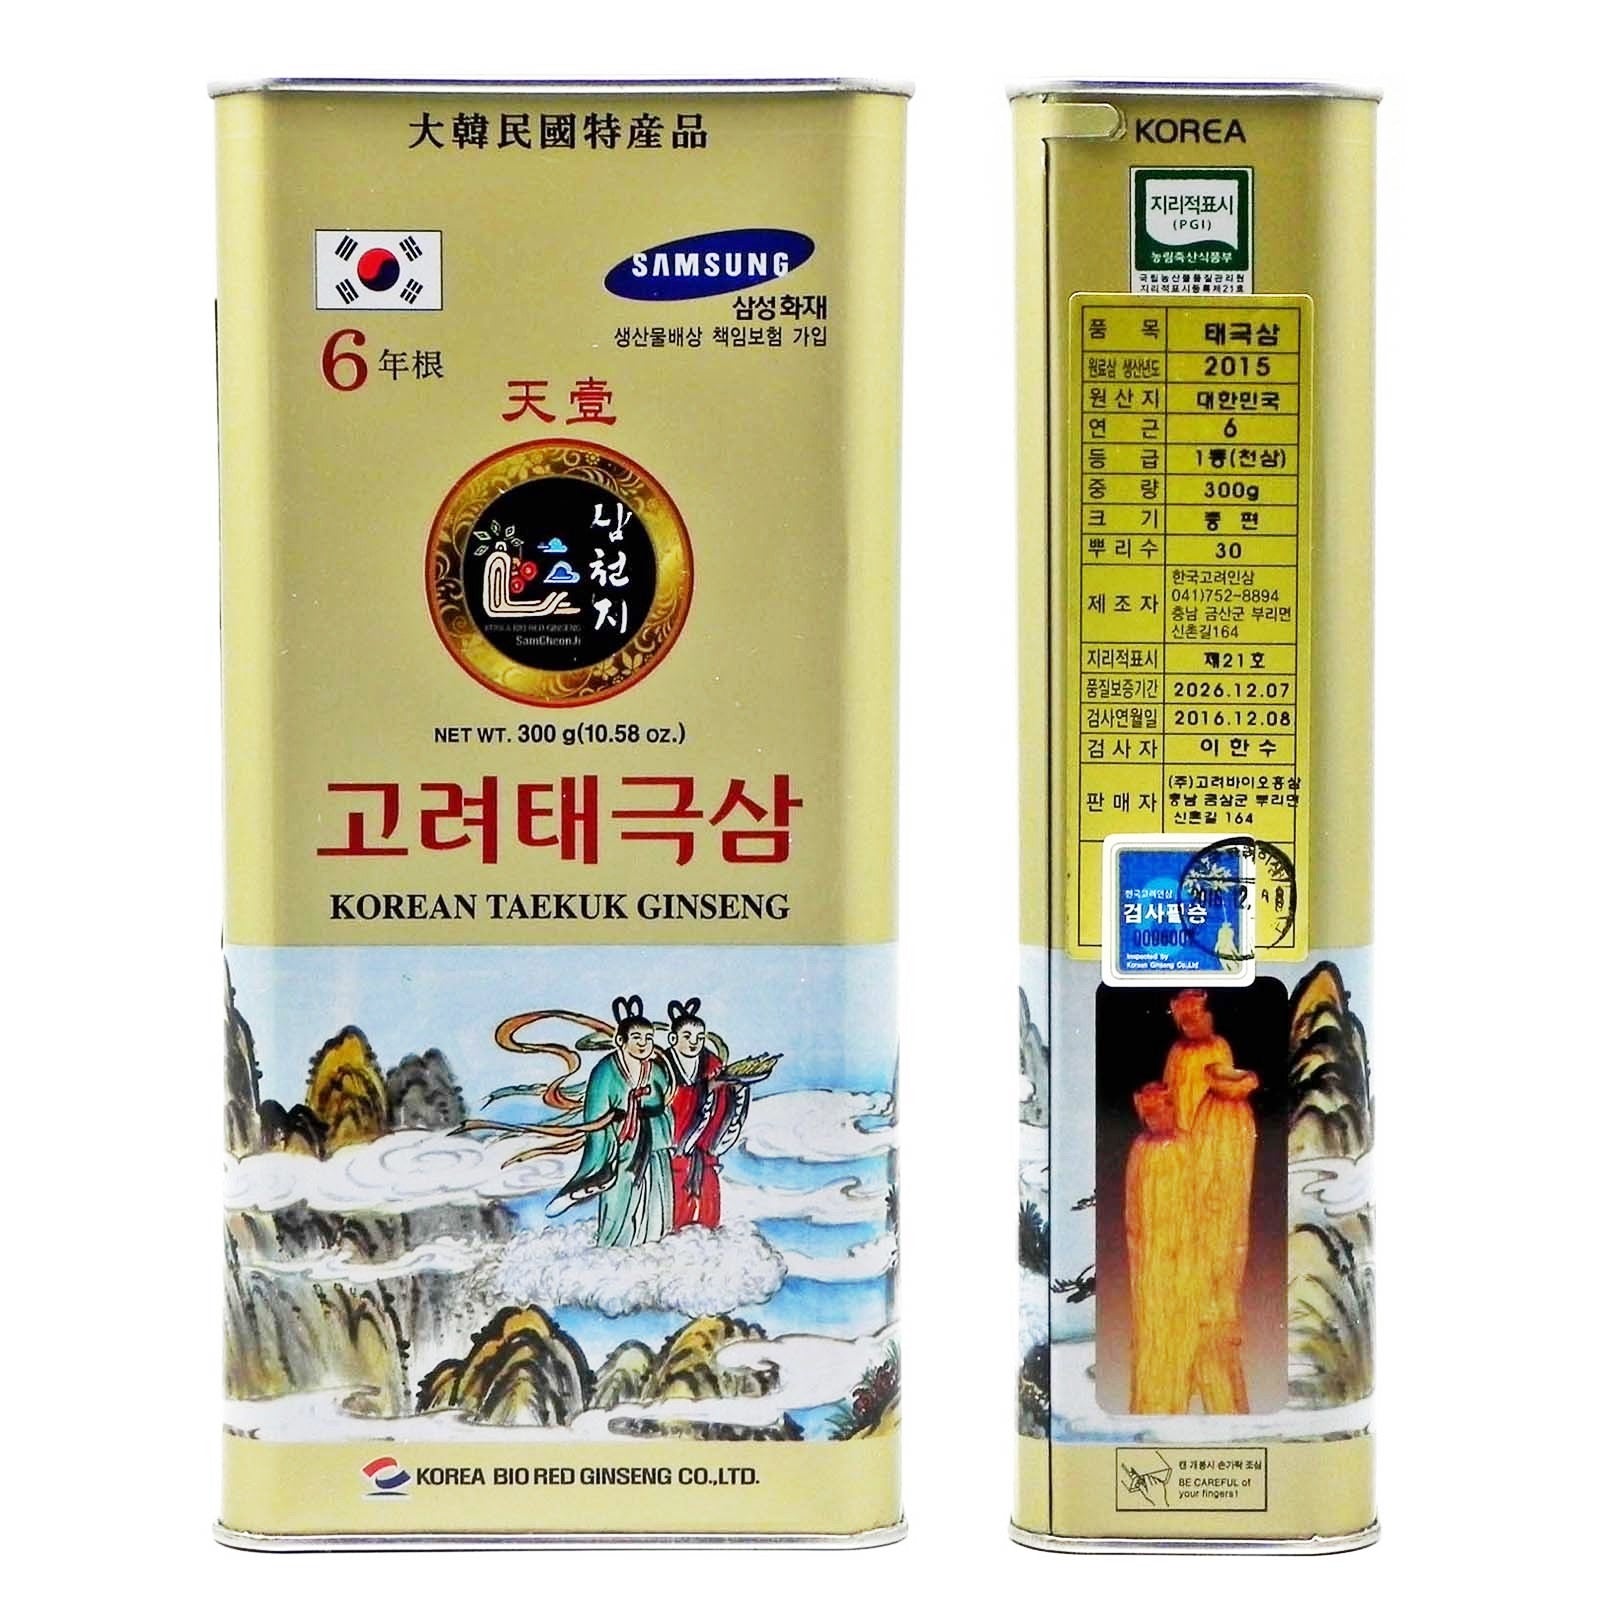 HEAVEN GRADE 6 Years Korean TAEKUK Ginseng Roots 300g [30 Roots]